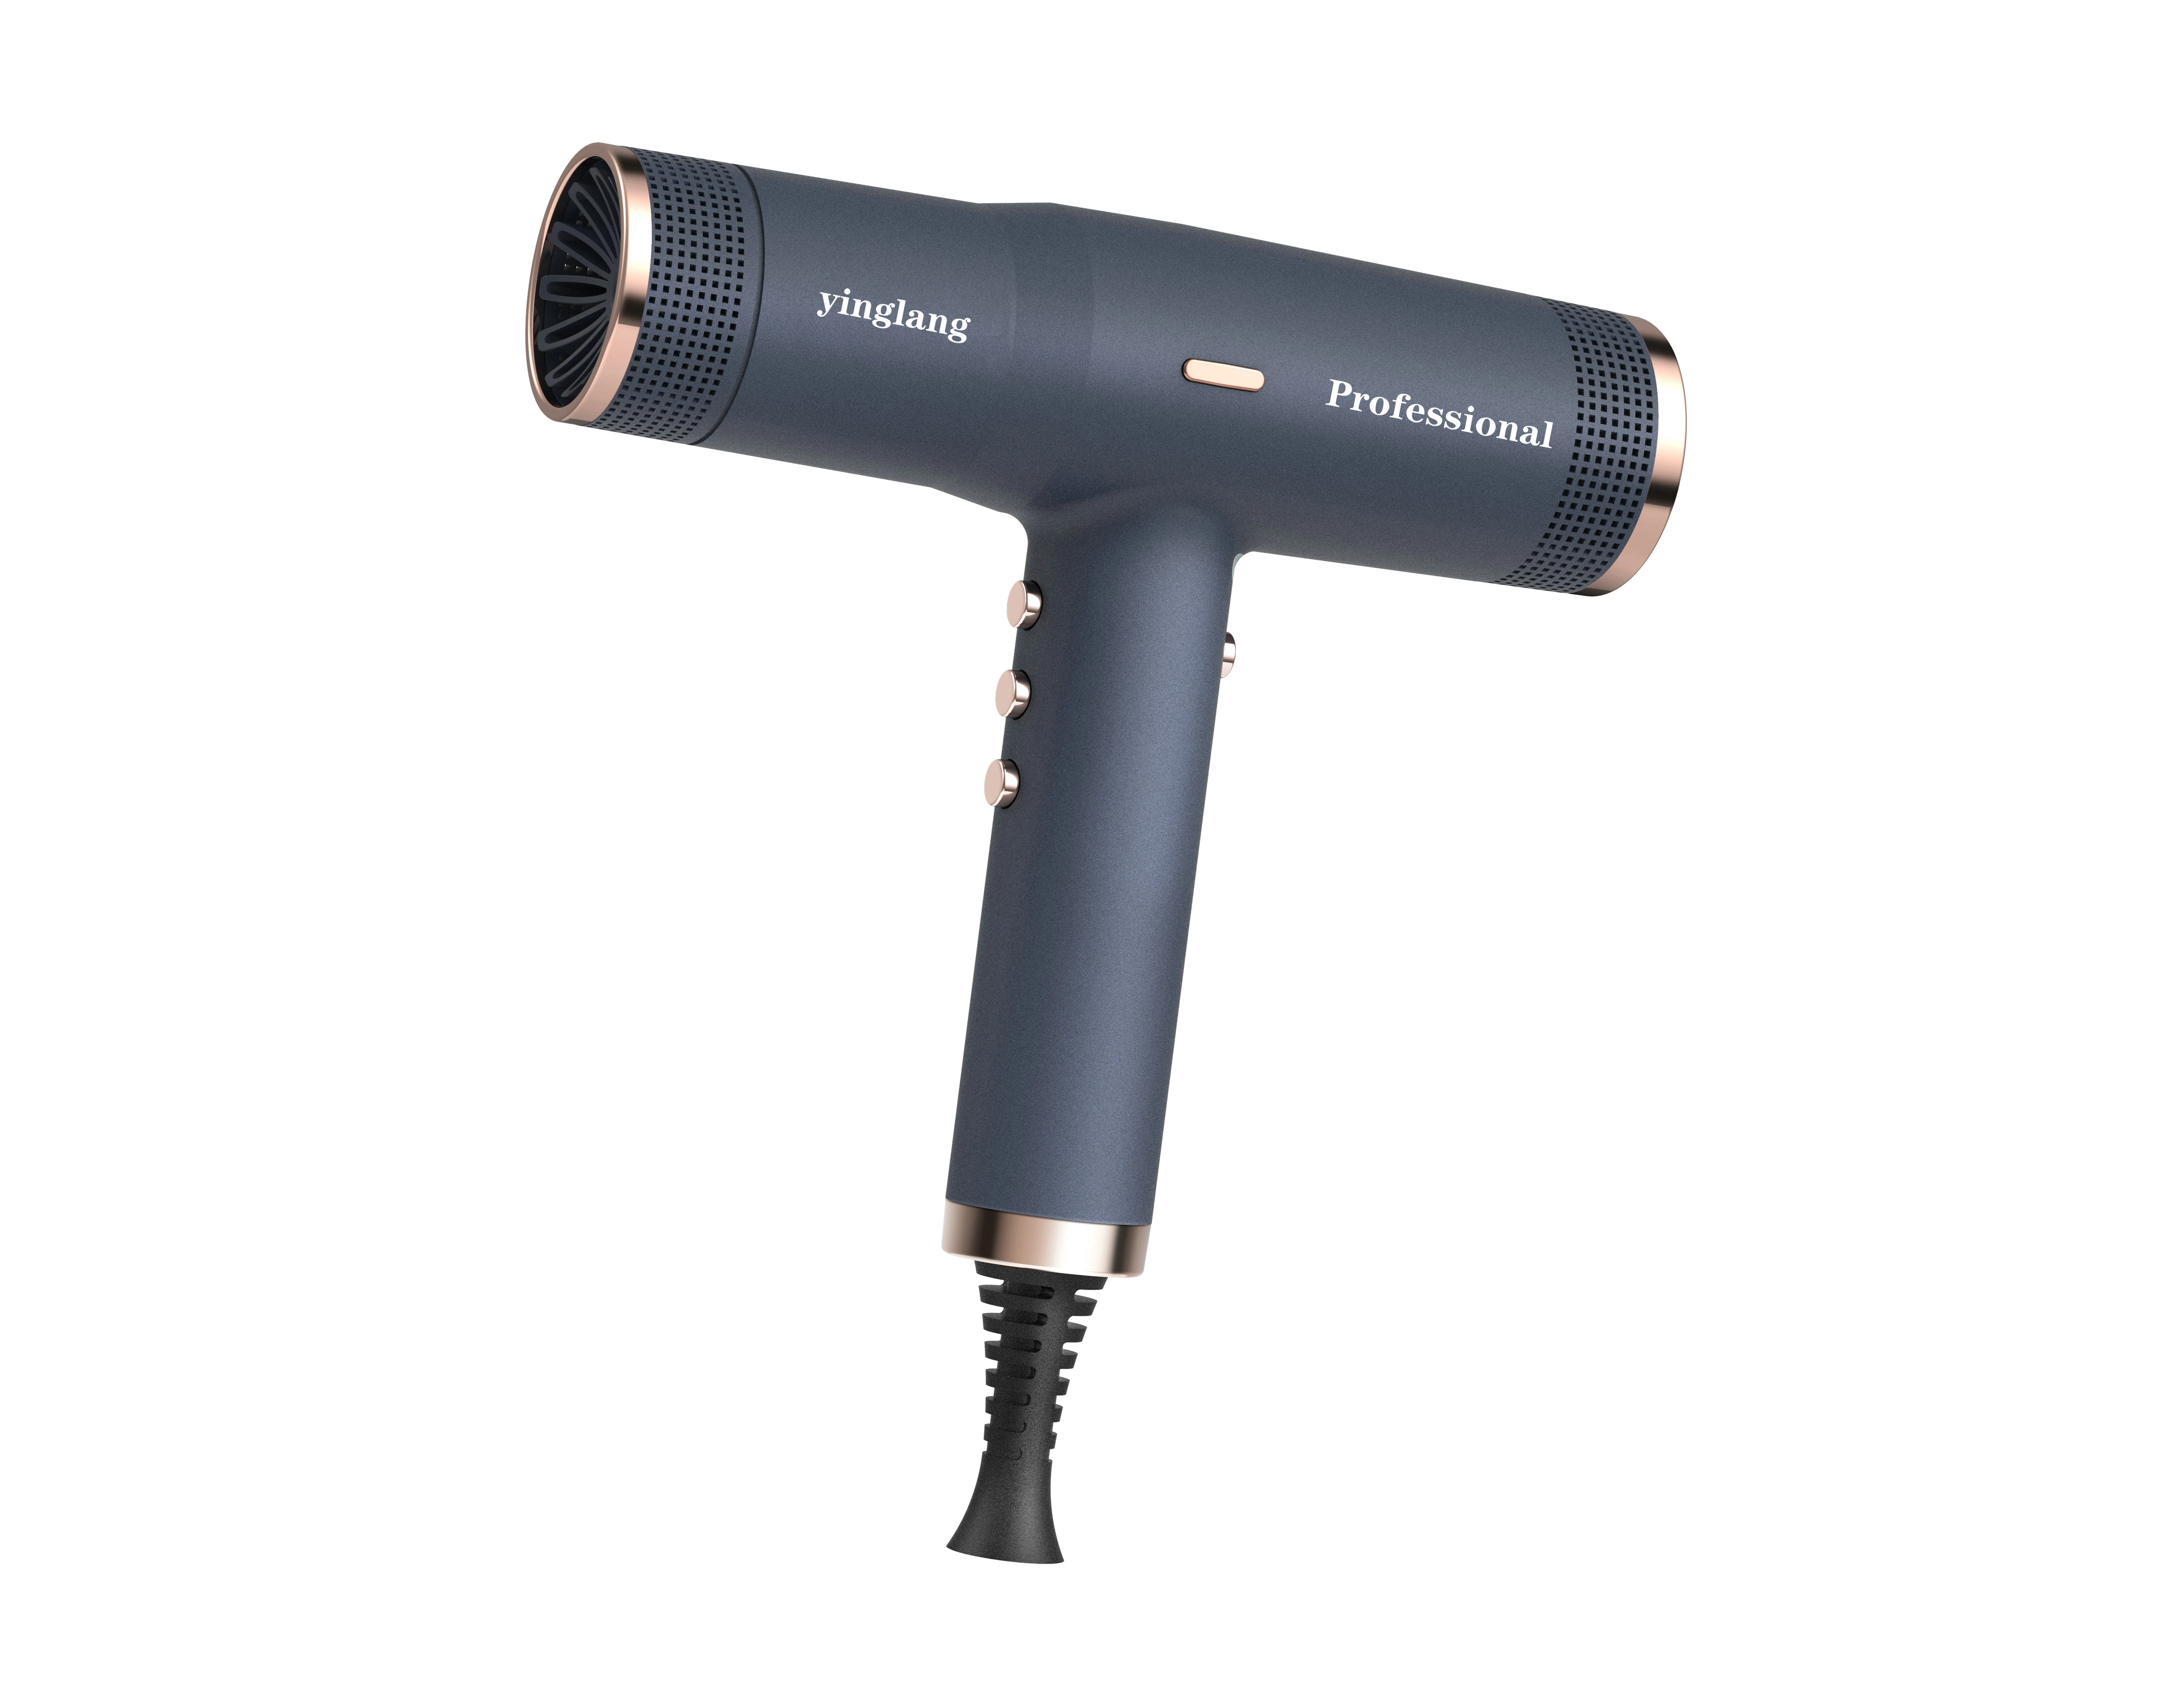 compact light weight professional hair dryer high power hair air dryer salon blow dryer brushless DC motor